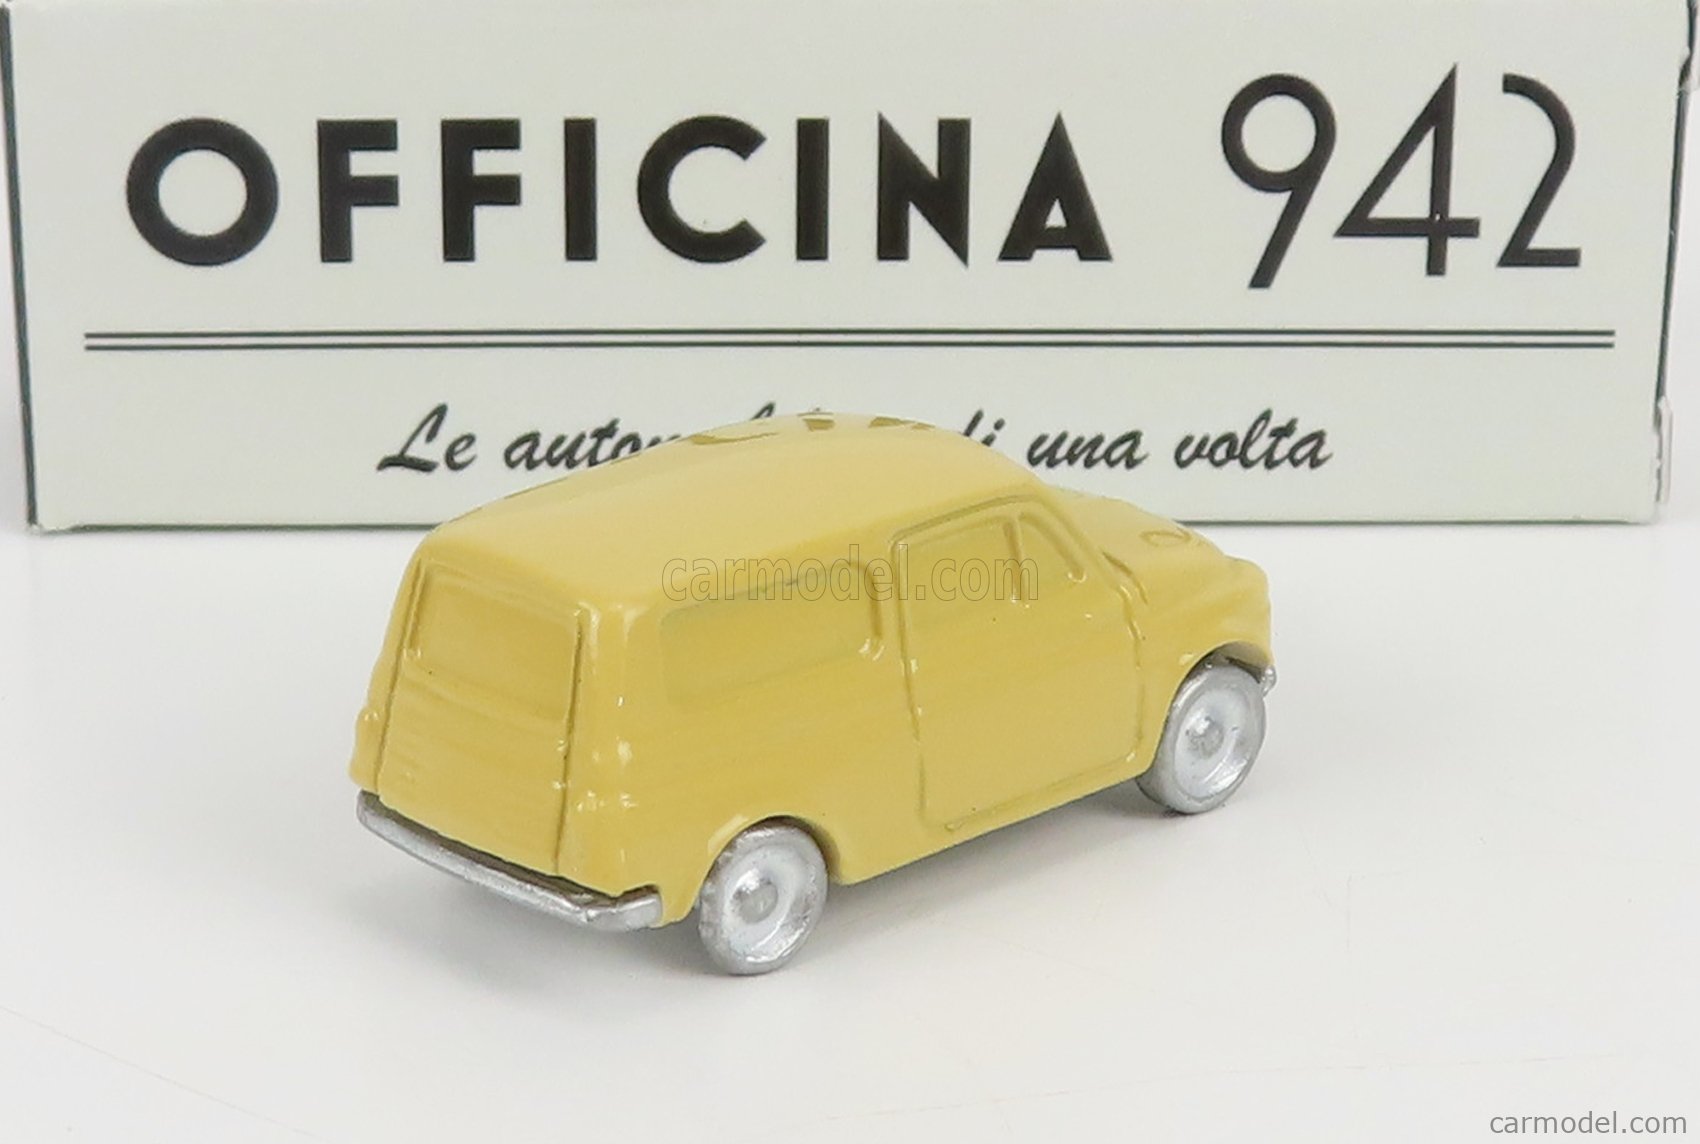 OFFICINA-942 ART2031A Scale 1/76  FIAT 500 UTILITY FRANCIS LOMBARDI 1959 BEIGE